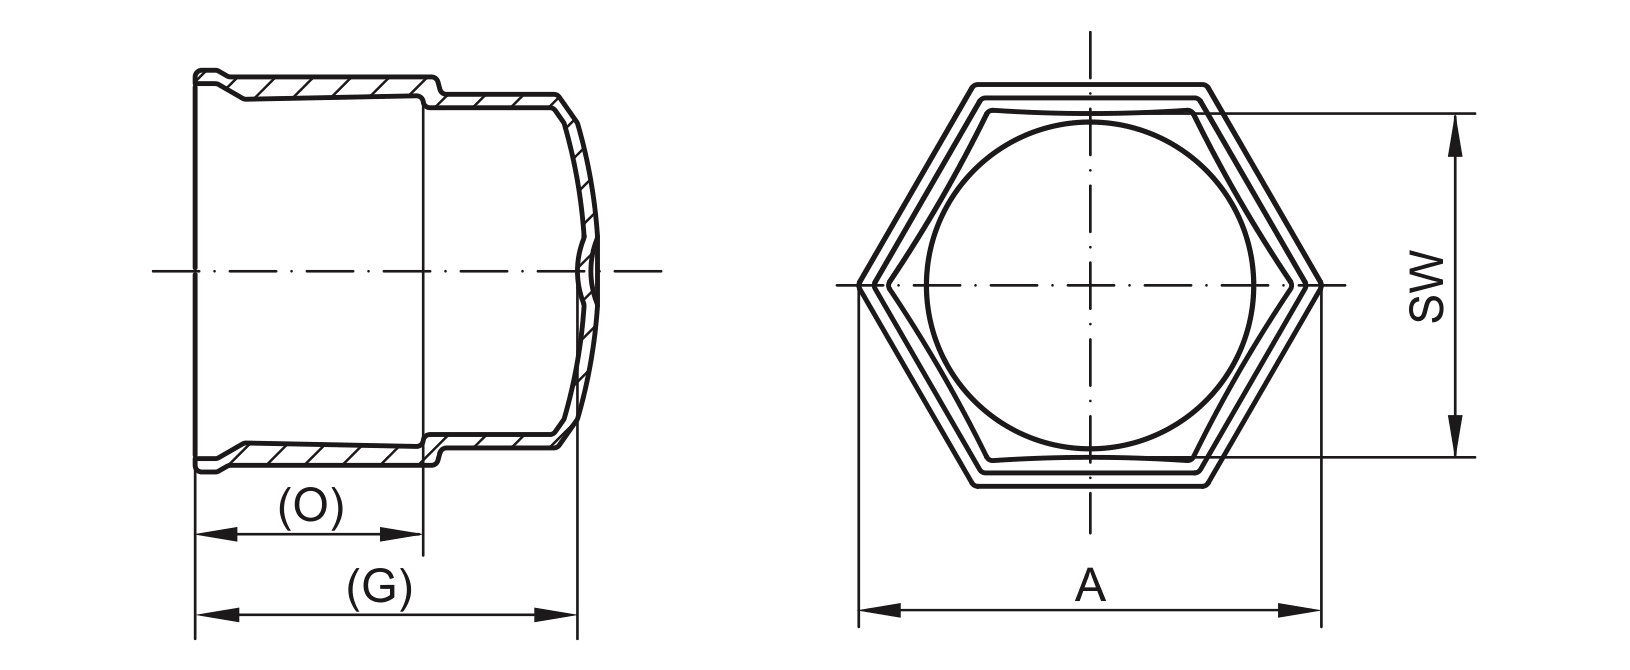 drawing hexagonal cap - GPN 1050